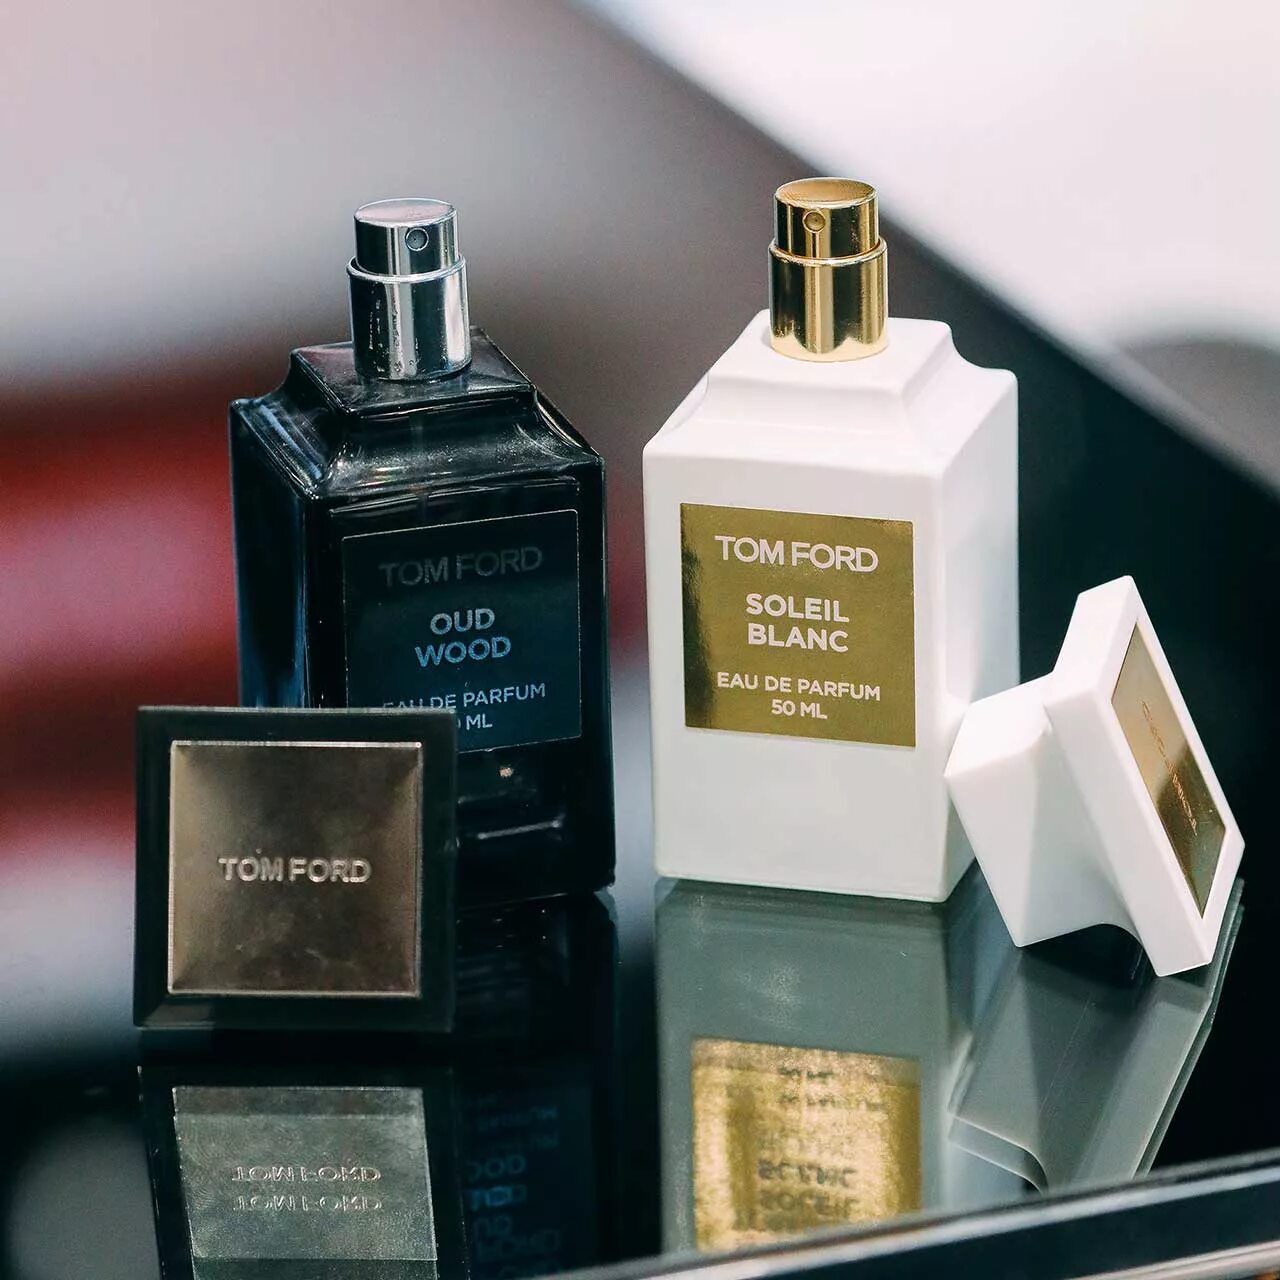 Том форд парфюм. Tom Ford Perfume. Tom Ford Initio. Tom Ford Fragrance. Селективная парфюмерия том Форд.